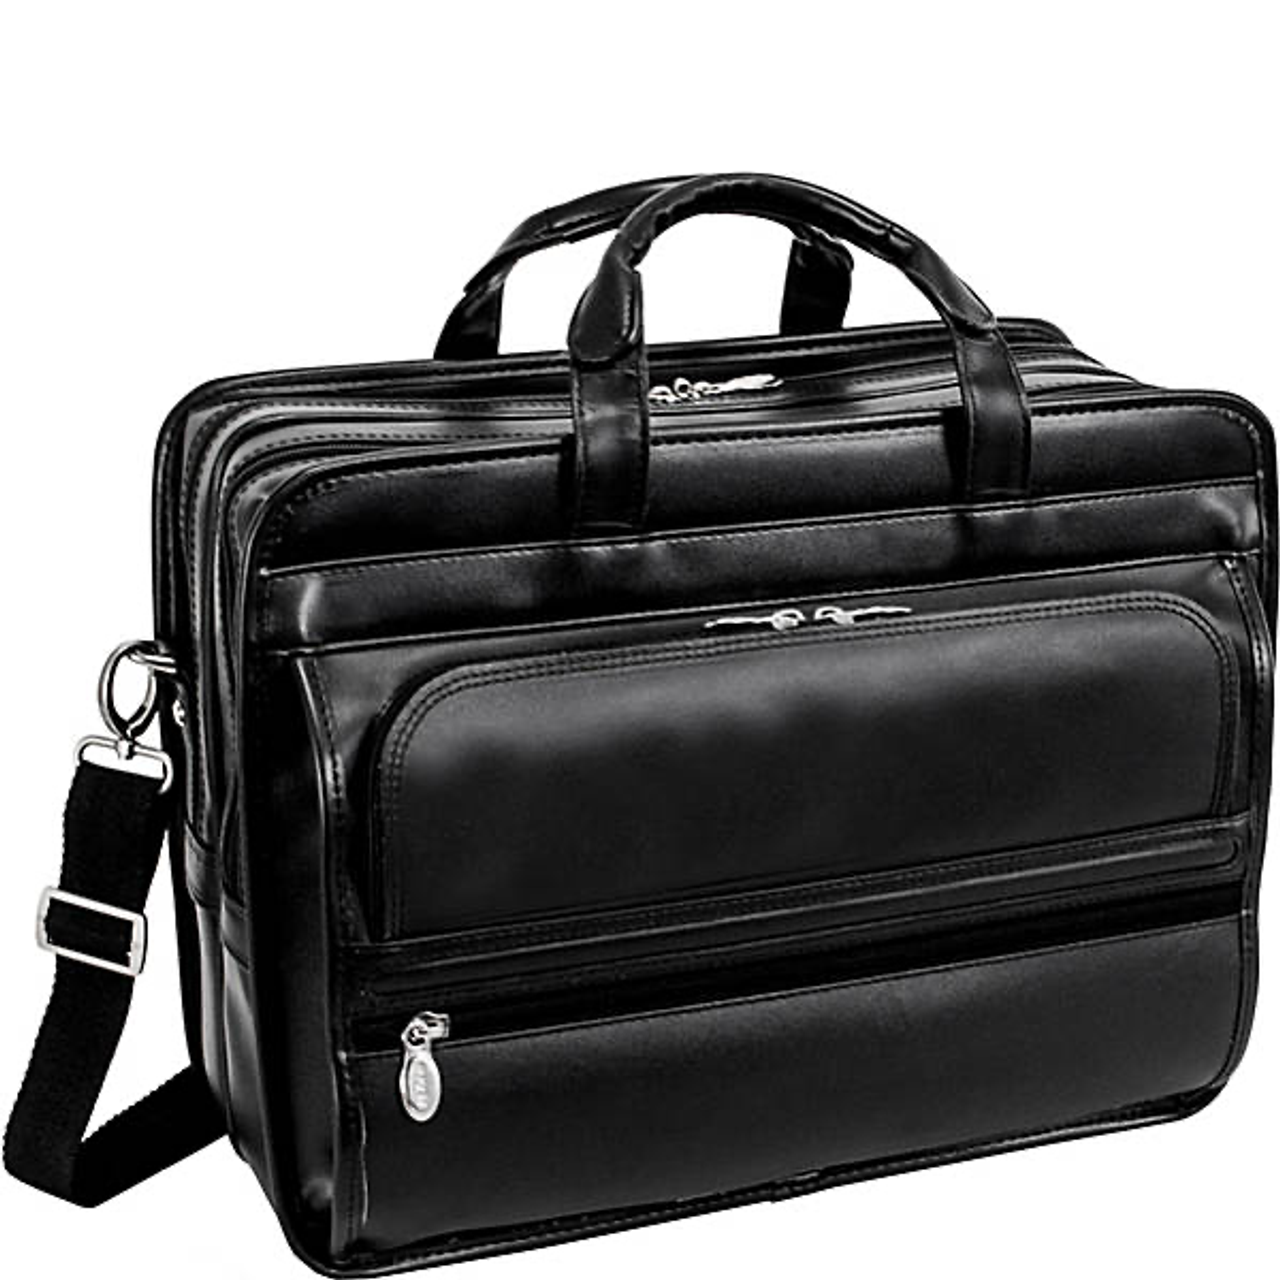 Franklin Covey Leather Computer Tote Bag / Laptop Case - Black